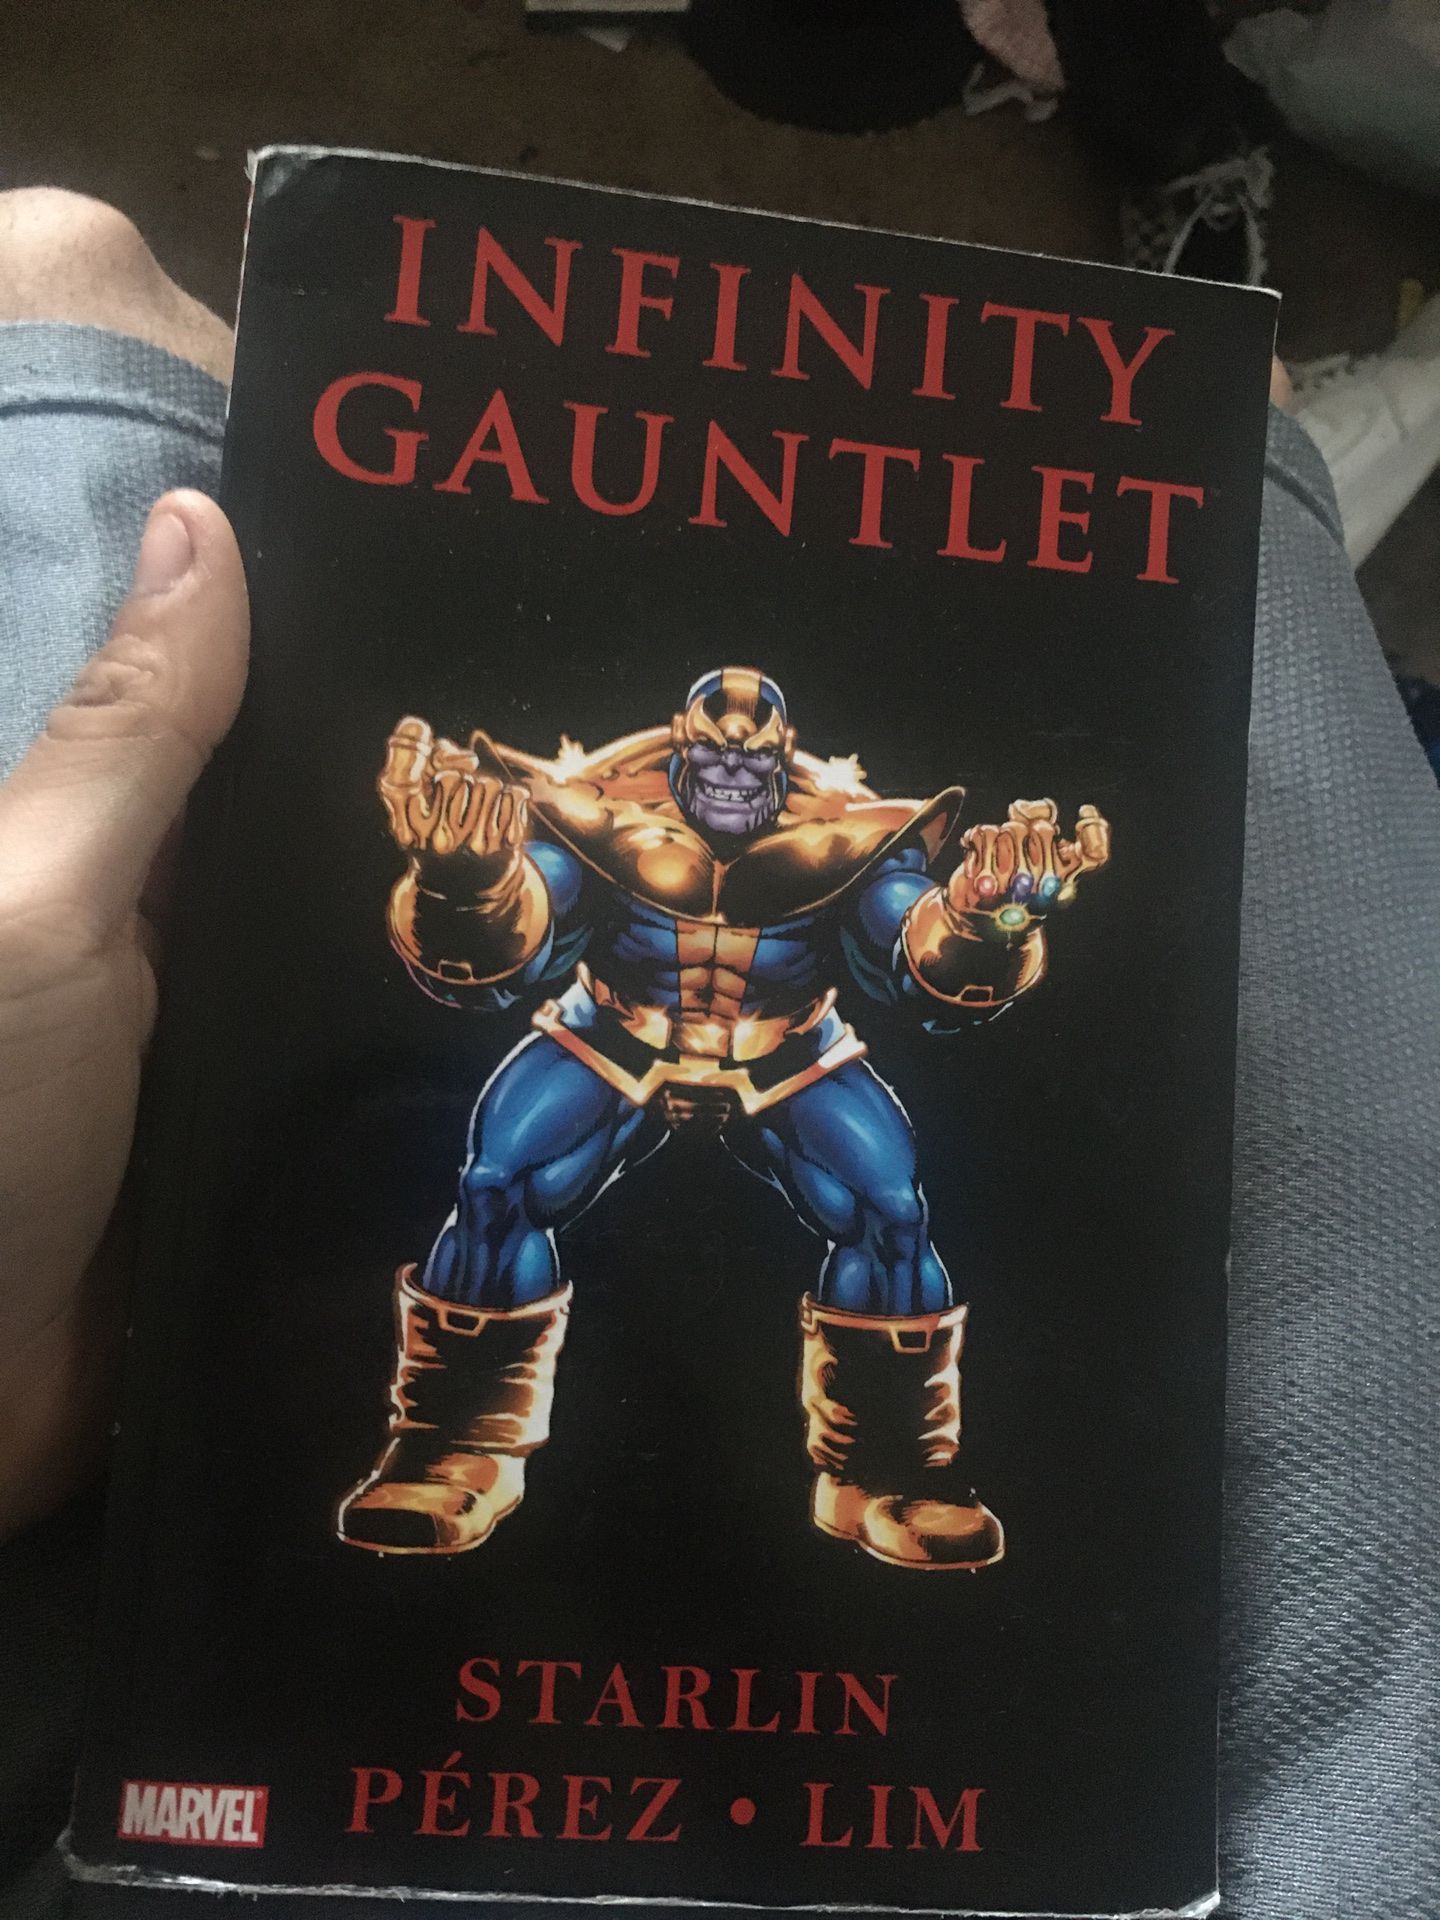 Infinity gauntlet comic